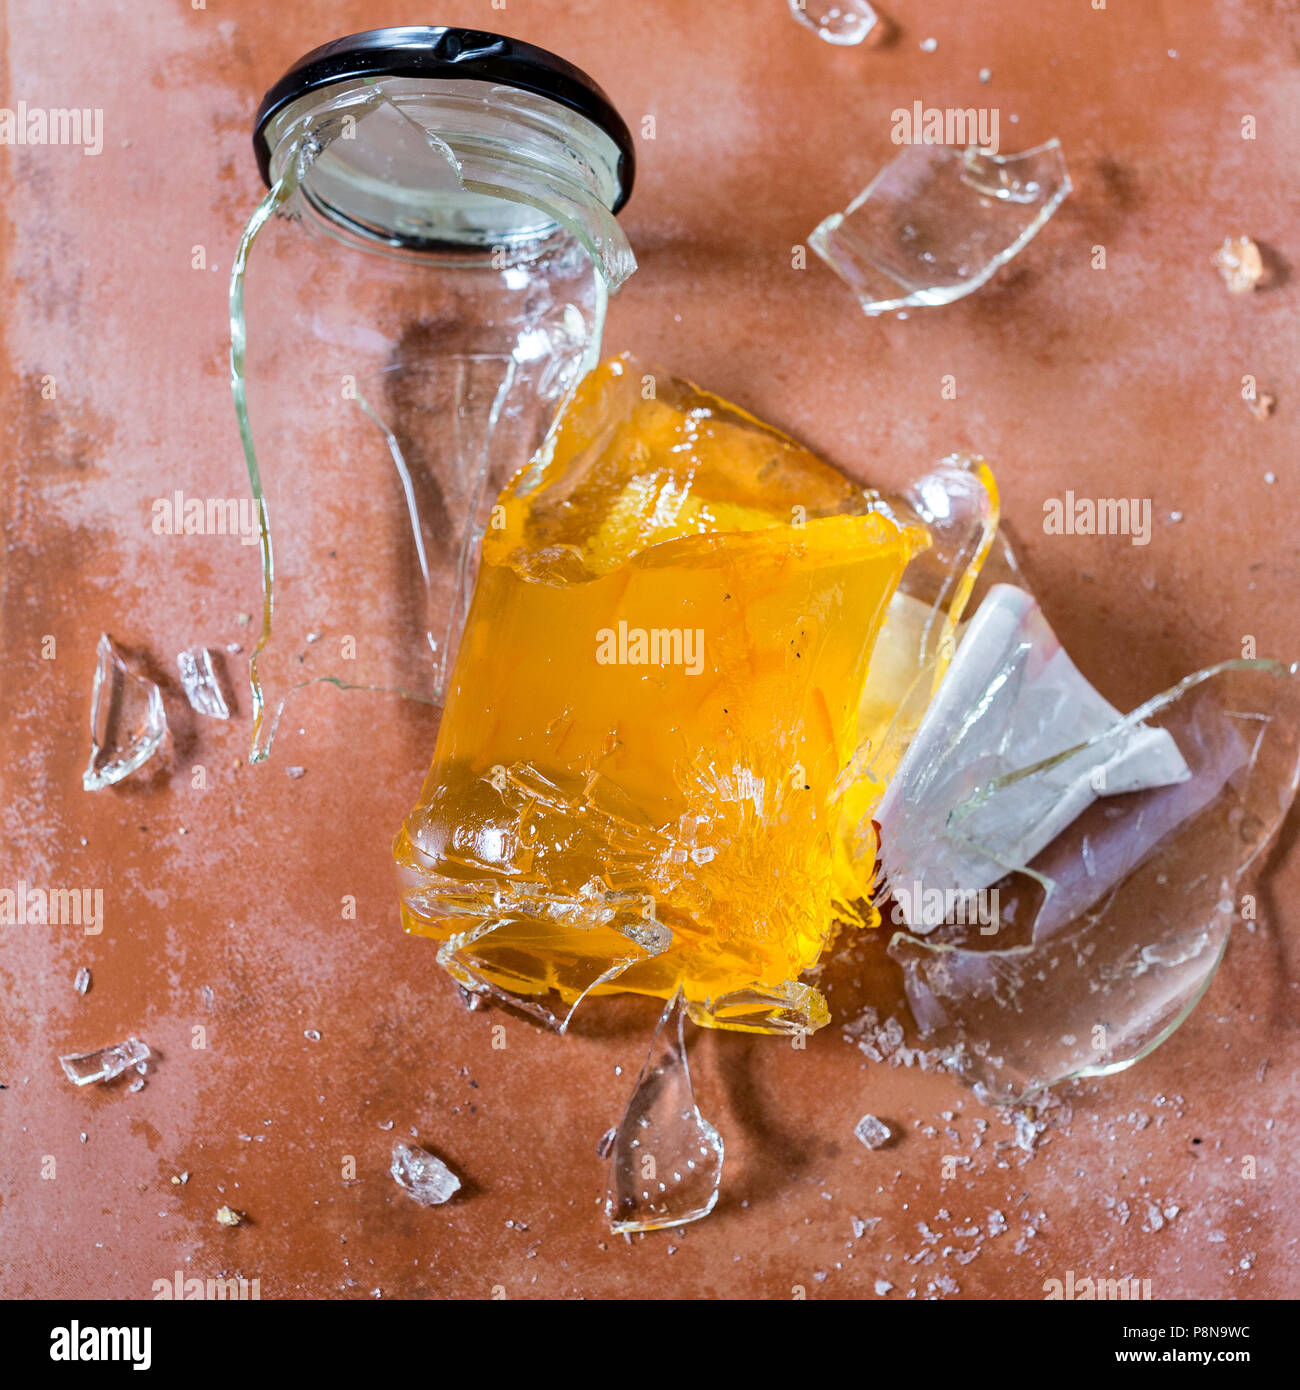 Broken marmalade glass jar on tile floor Stock Photo